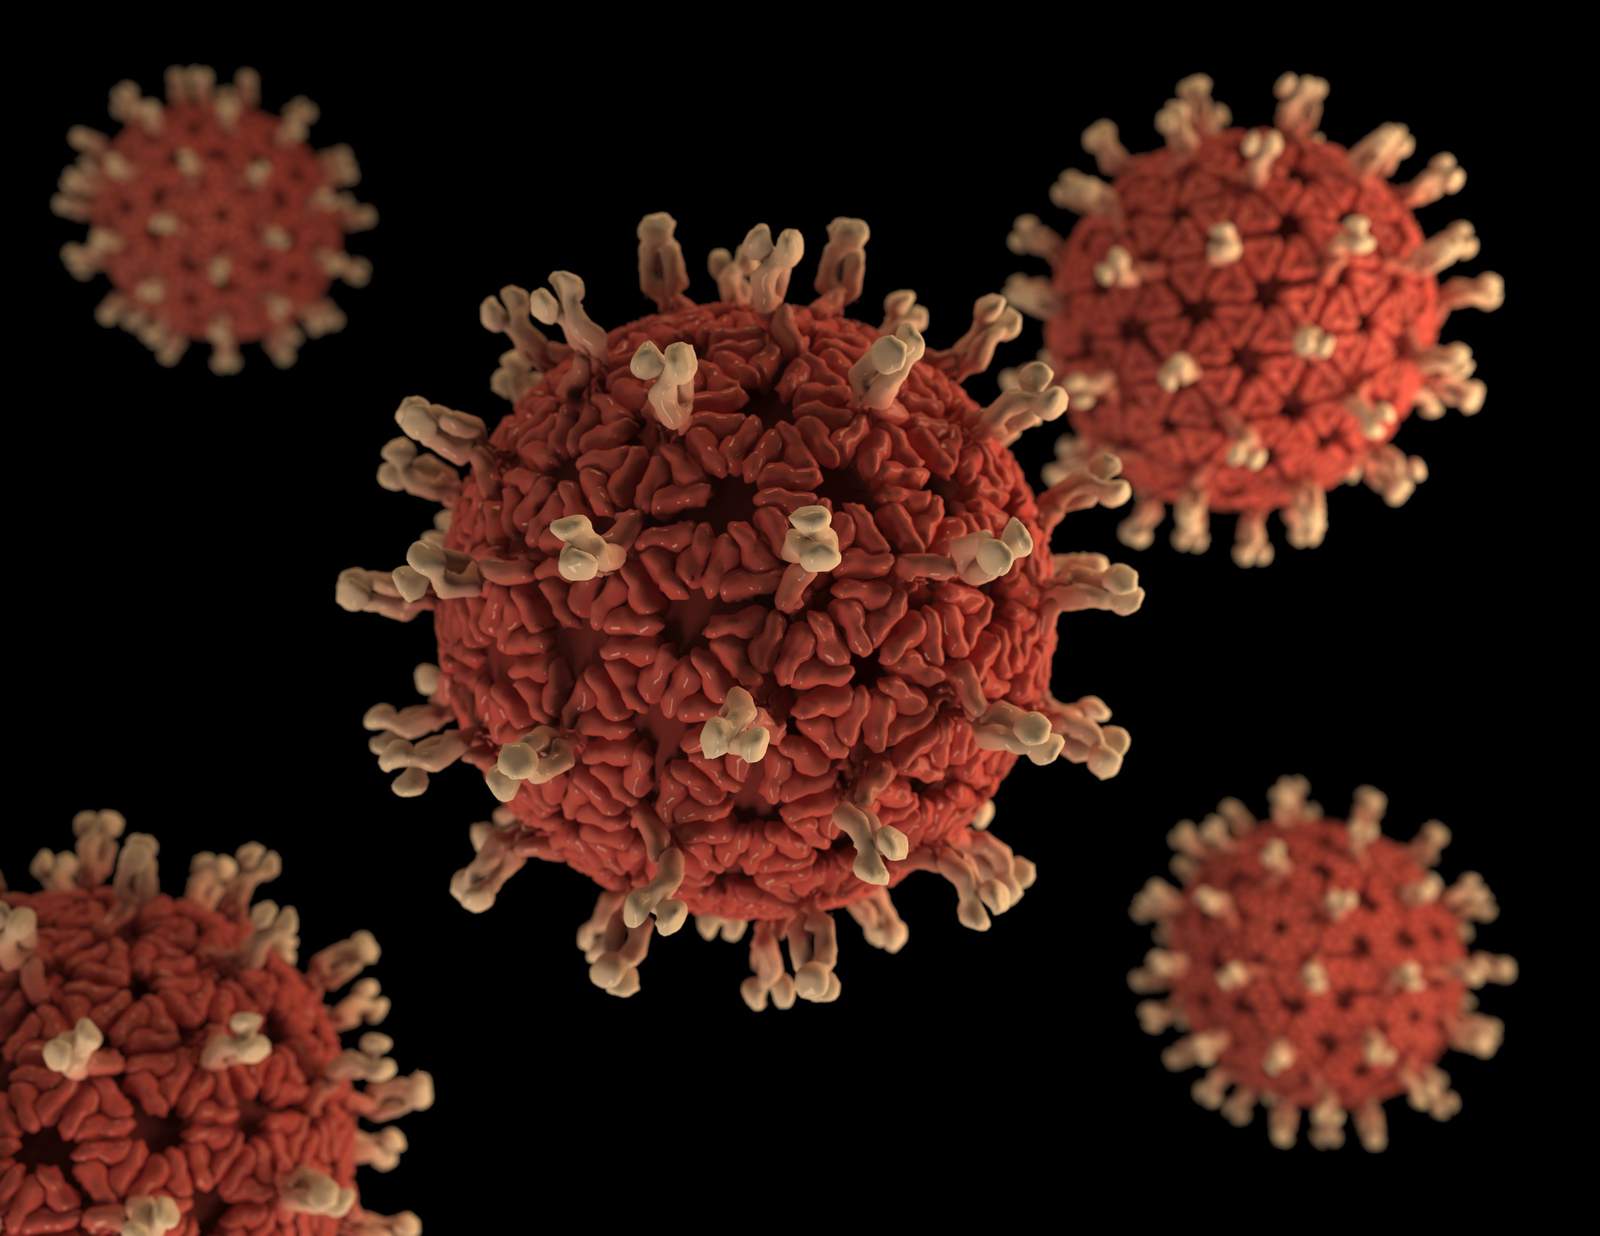 Man at Wayne County hospital is Michigan’s first confirmed coronavirus death